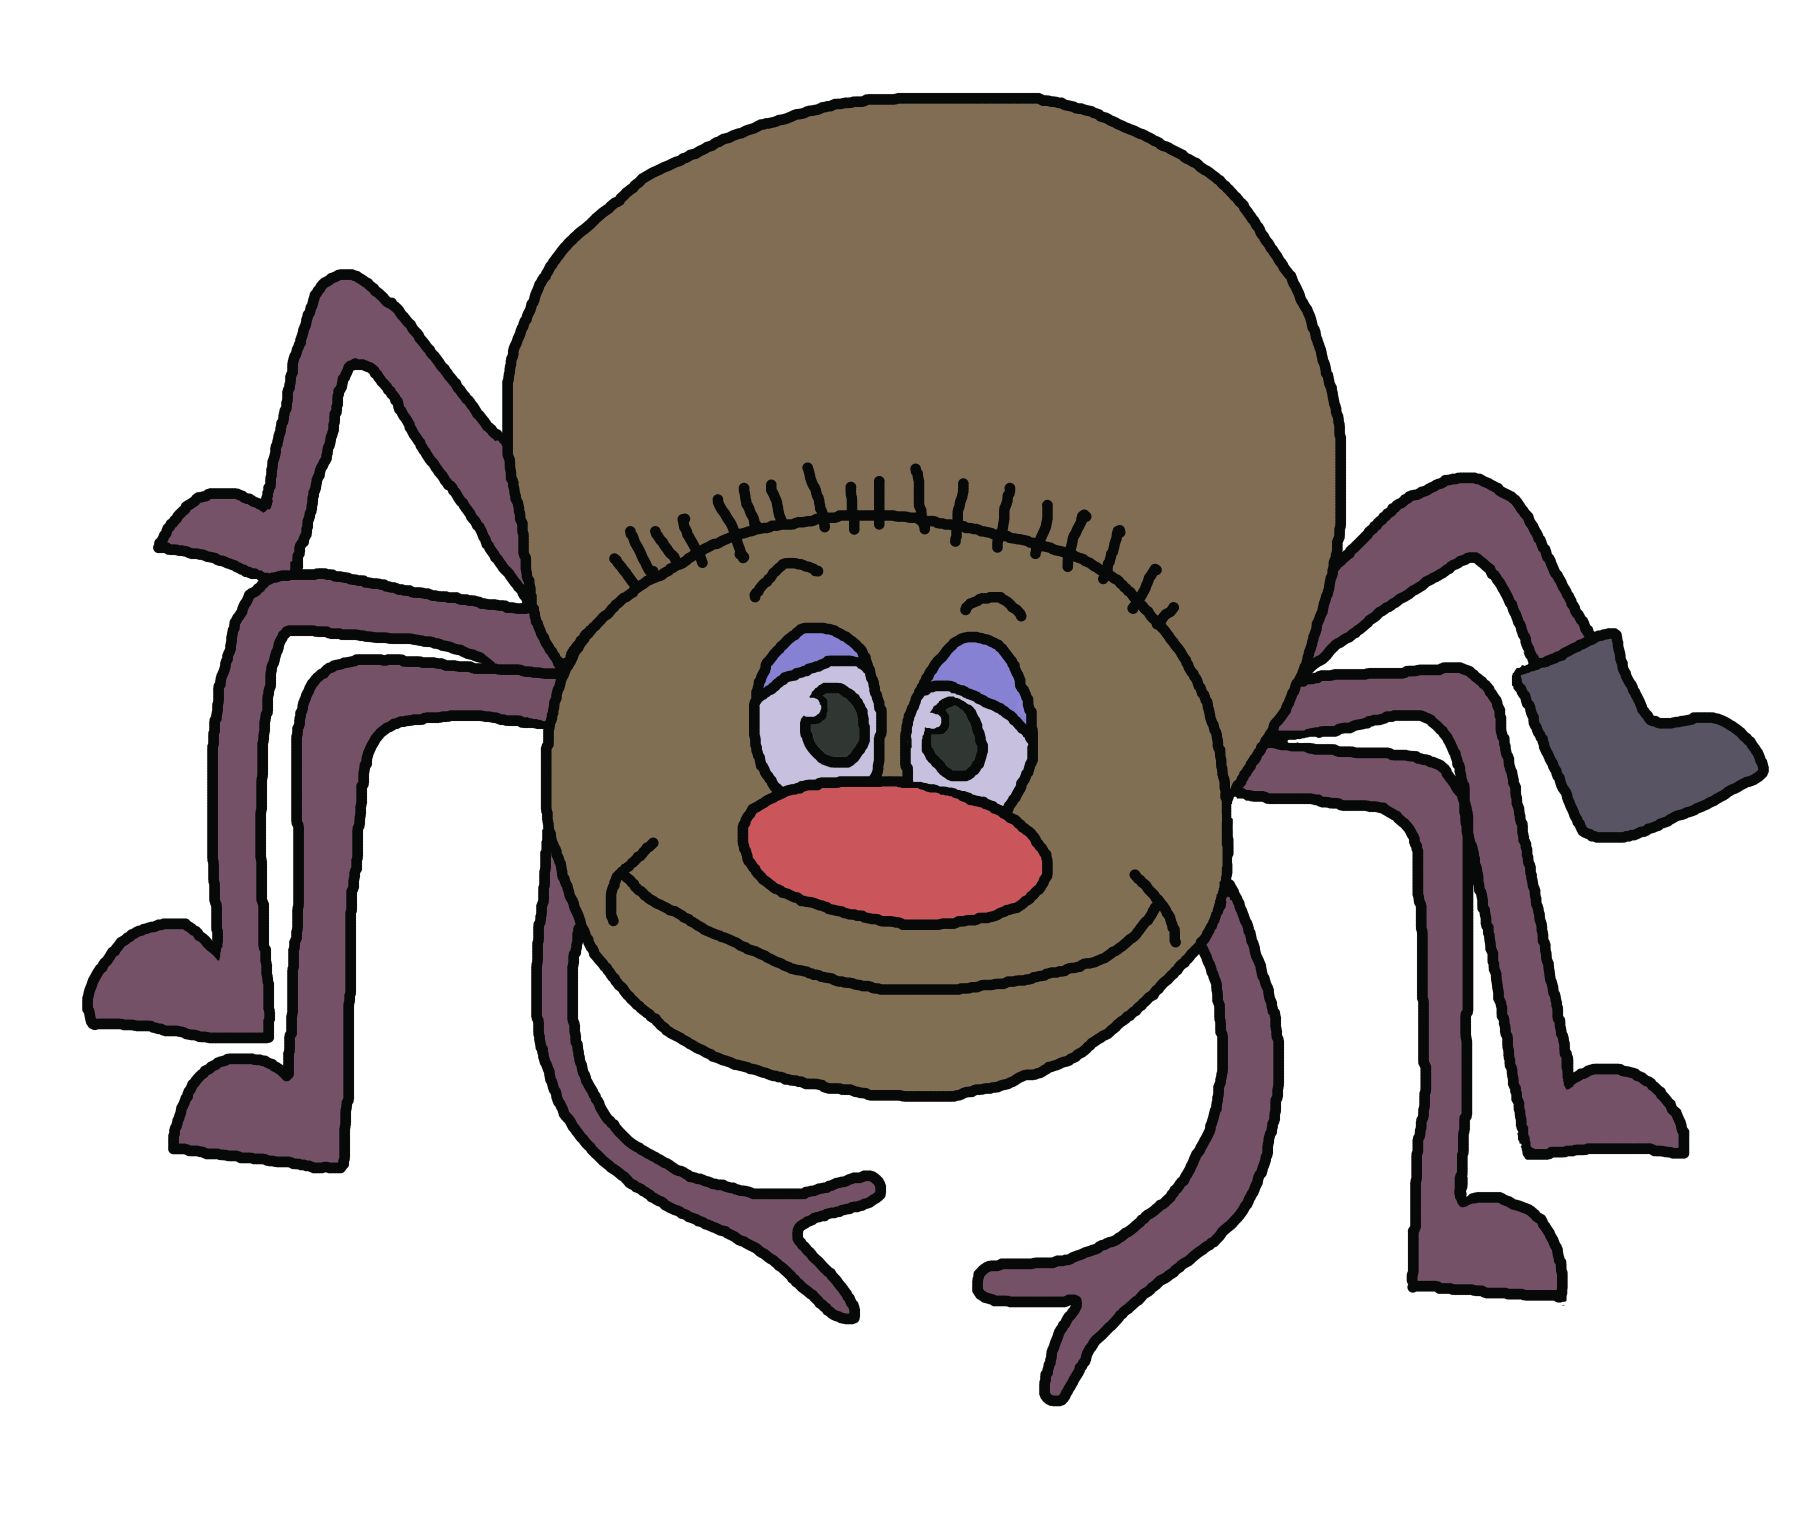 Mr Spider - Pan Pajaczek